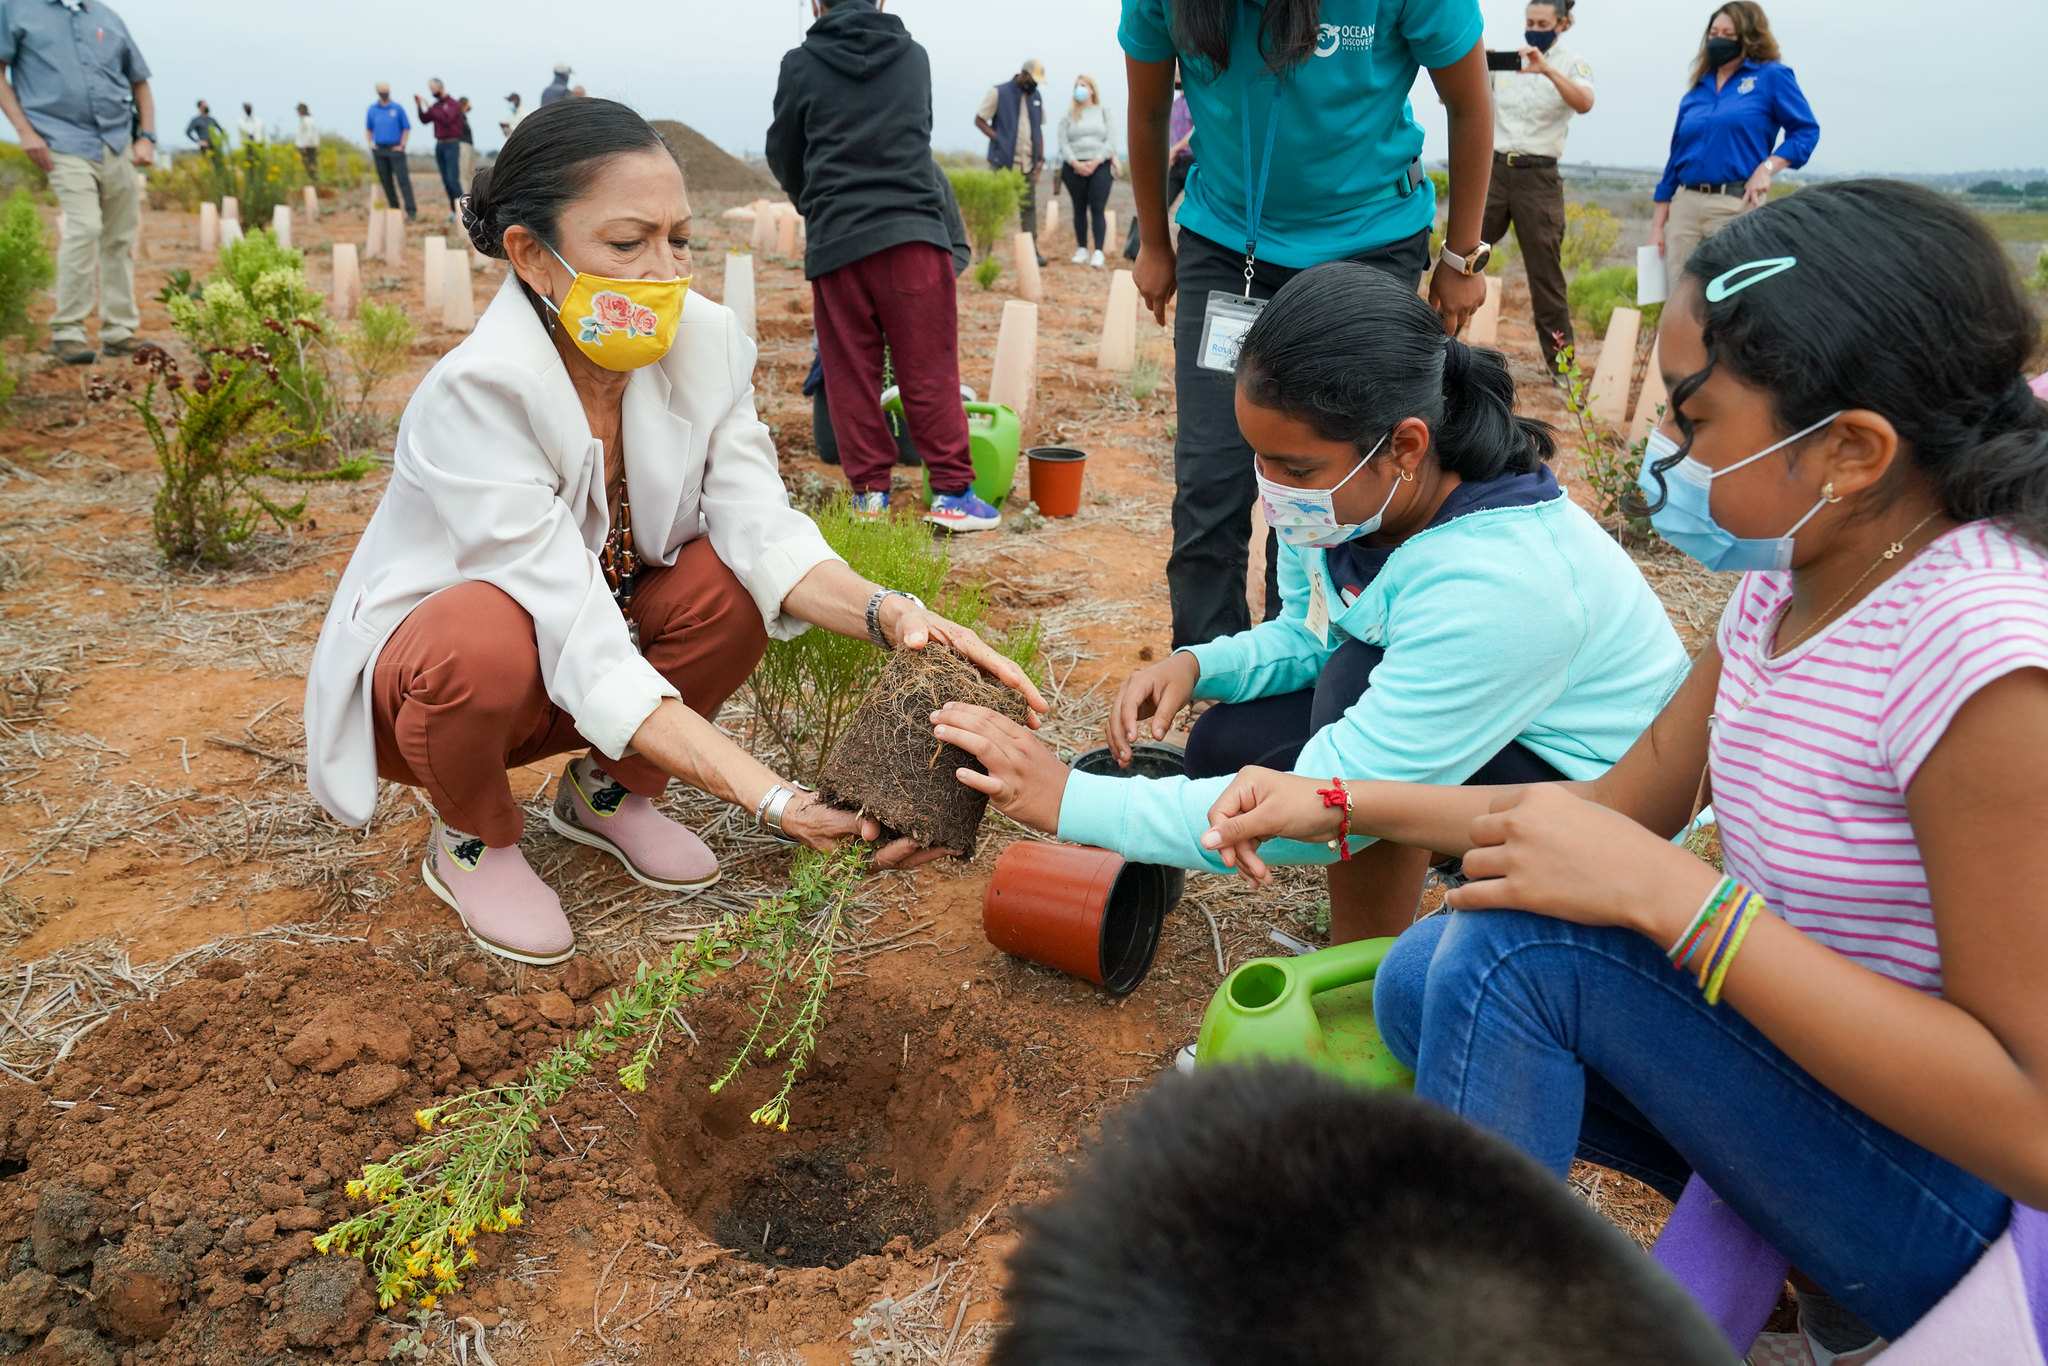 Secretary Haaland plants a tree alongside children at the San Diego Wildlife Refuge.